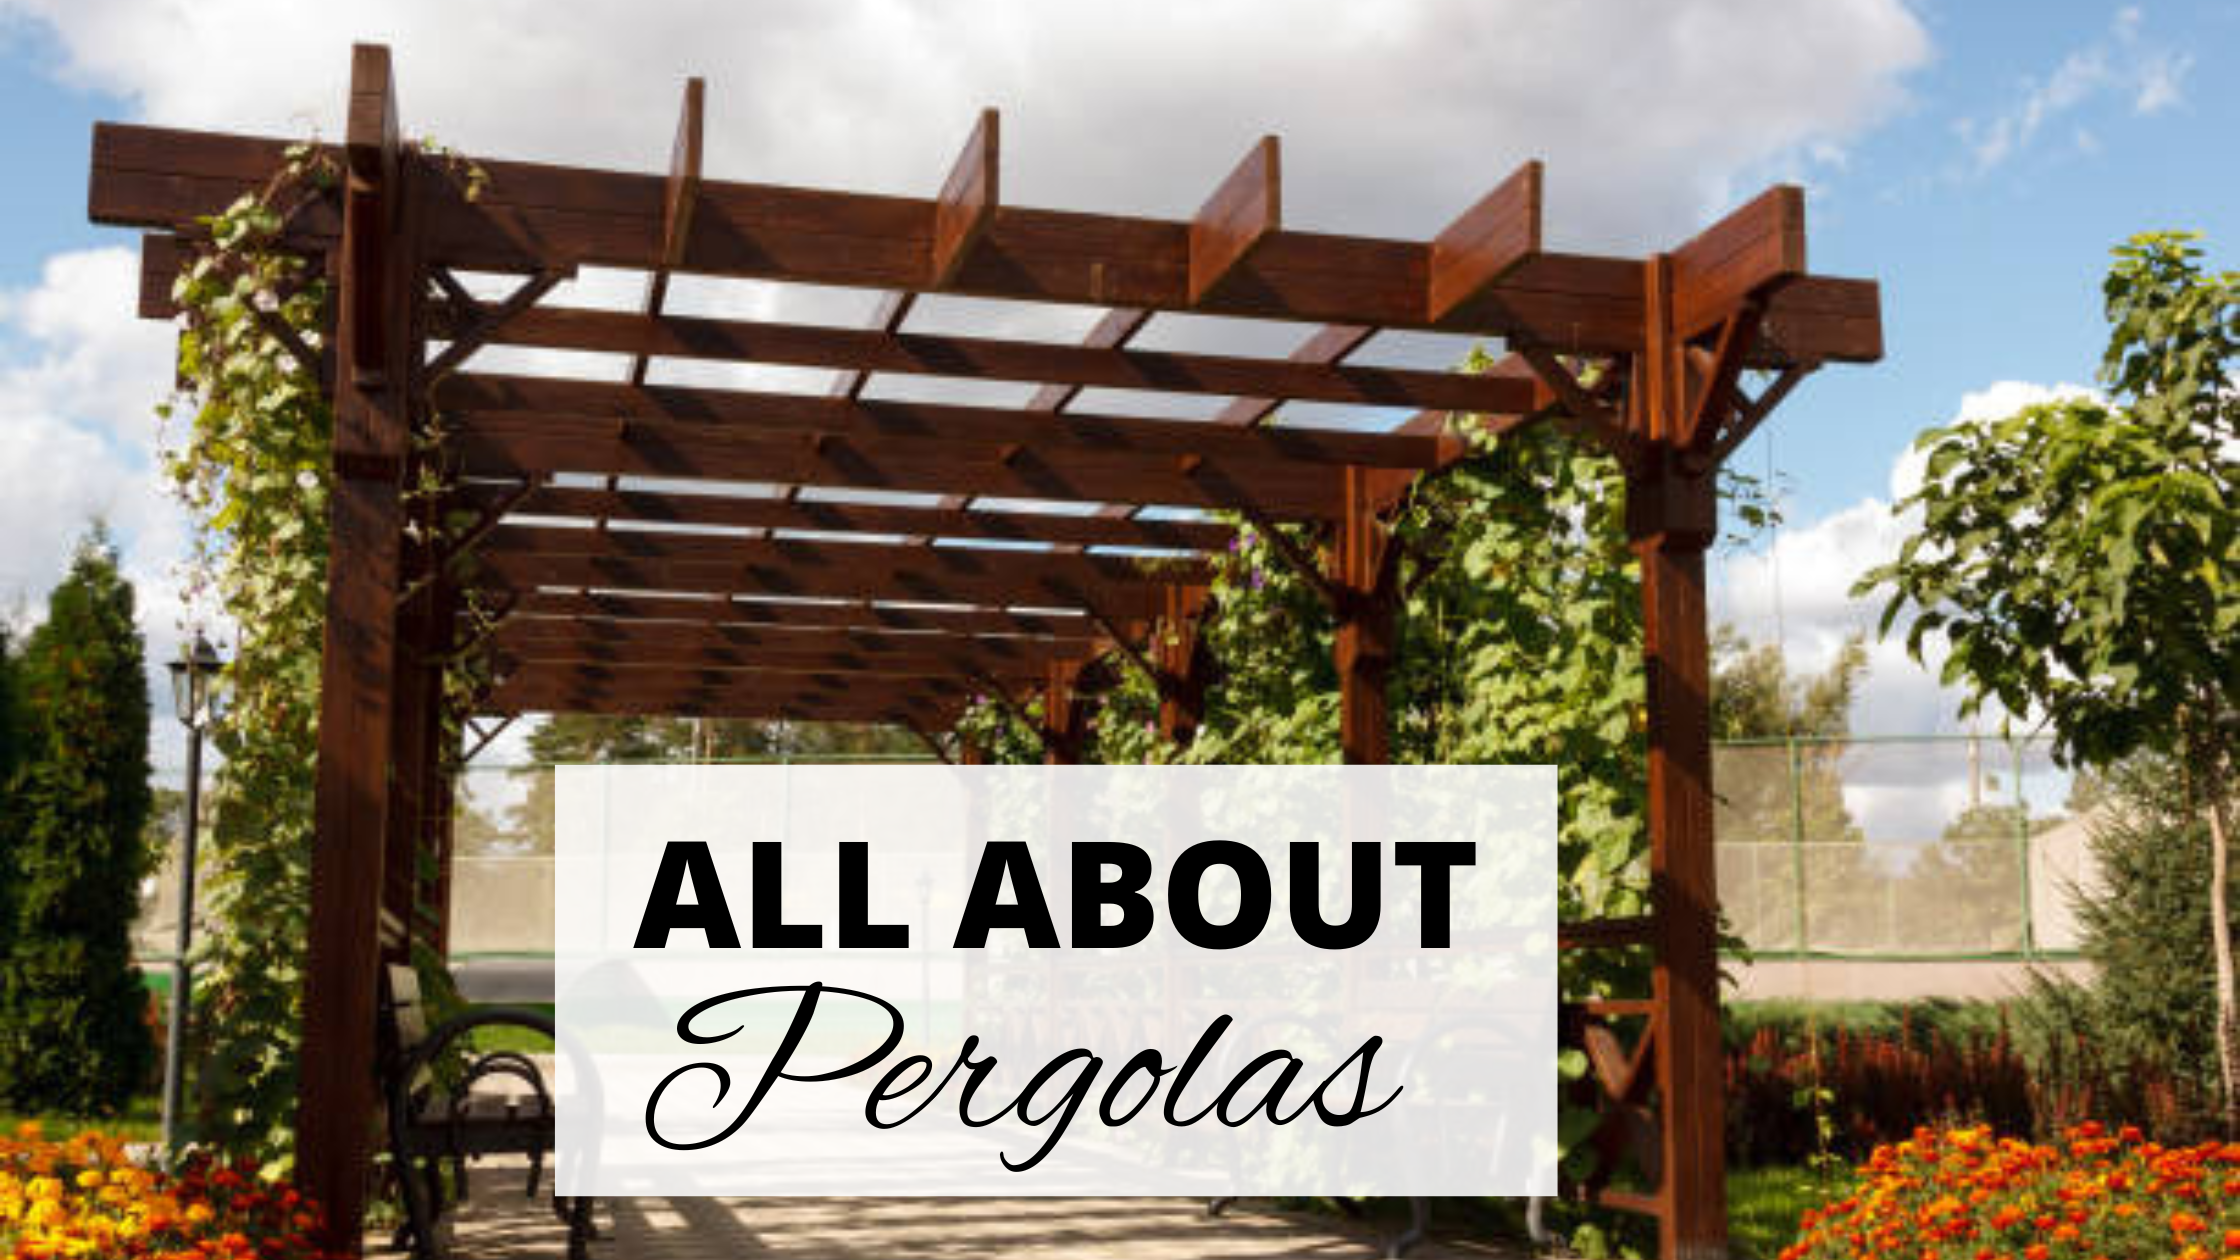 All about pergolas